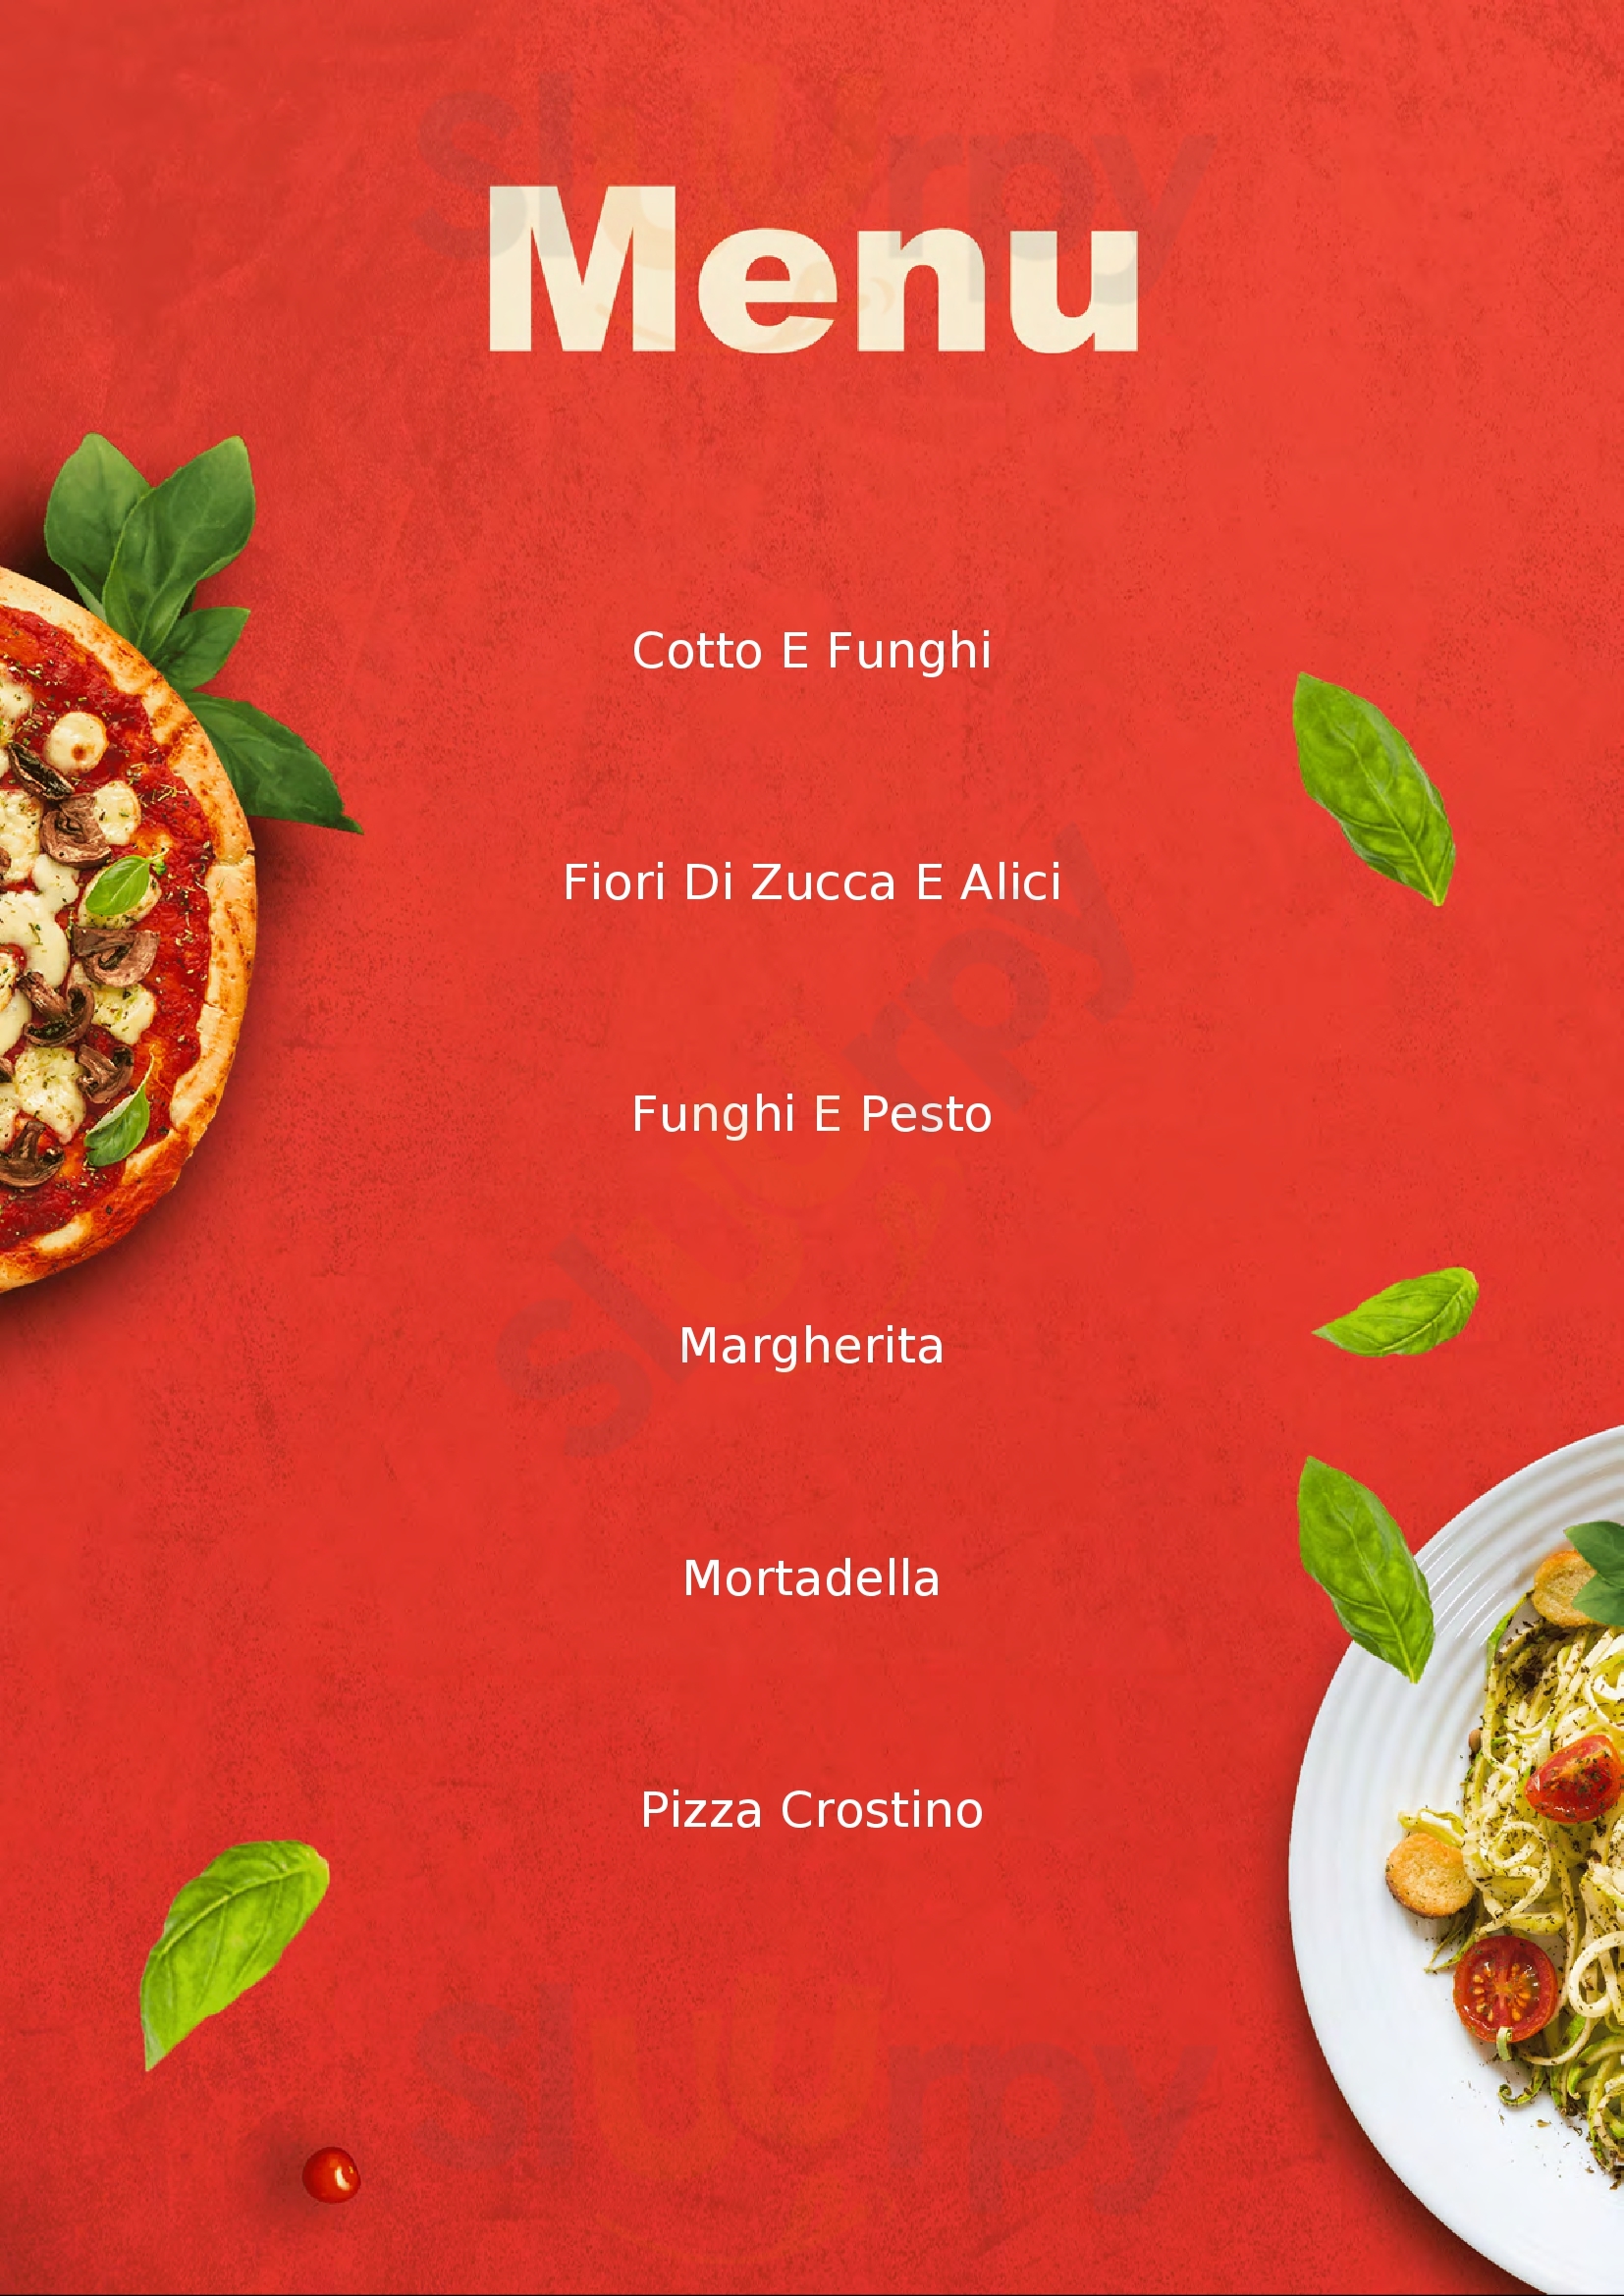 La Pizzetta Express Roma menù 1 pagina